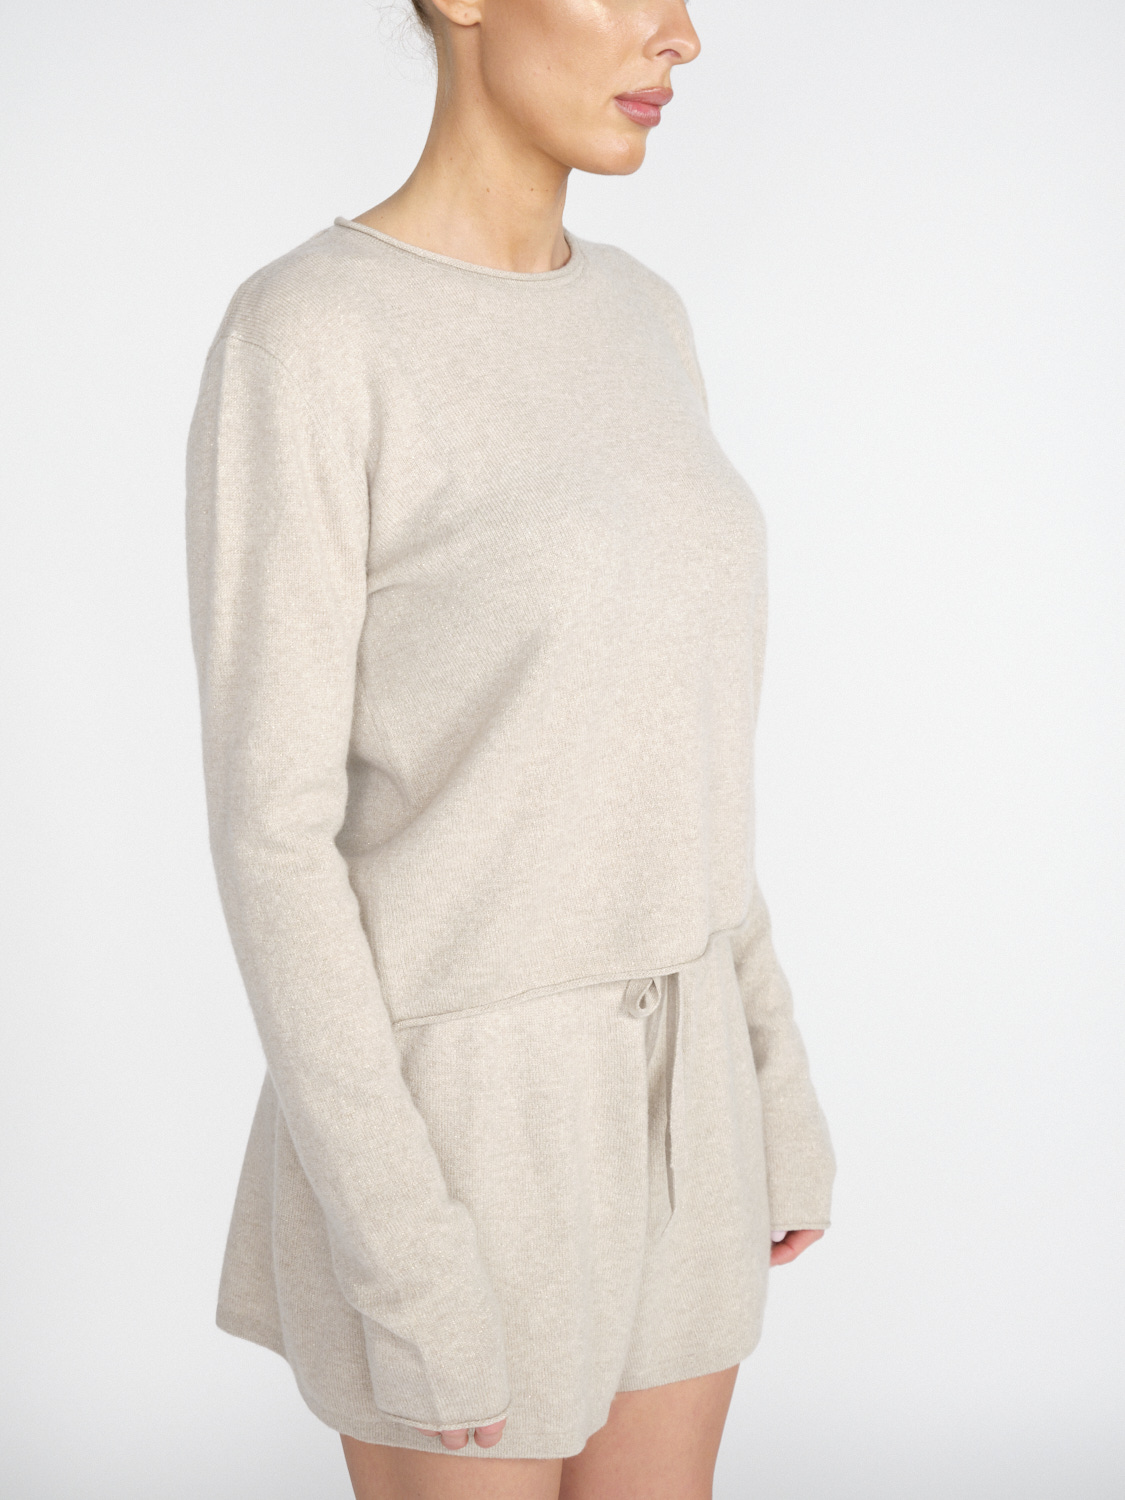 Lisa Yang Ida - Lightweight cashmere jumper with glitter effects  beige S/M